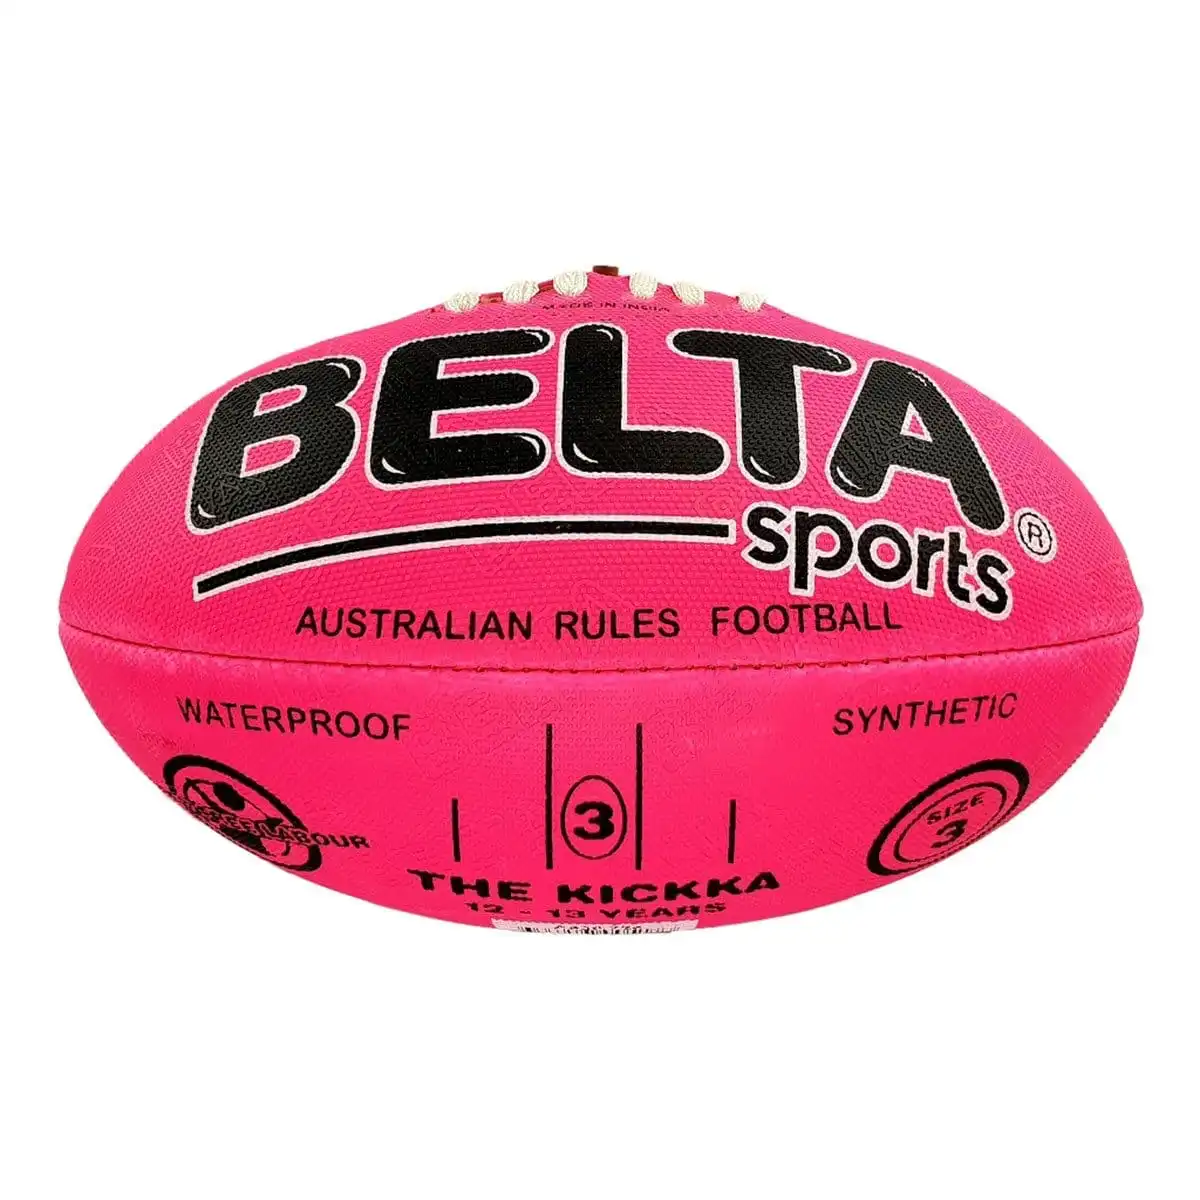 Belta Sports Size 3 Football - Pink